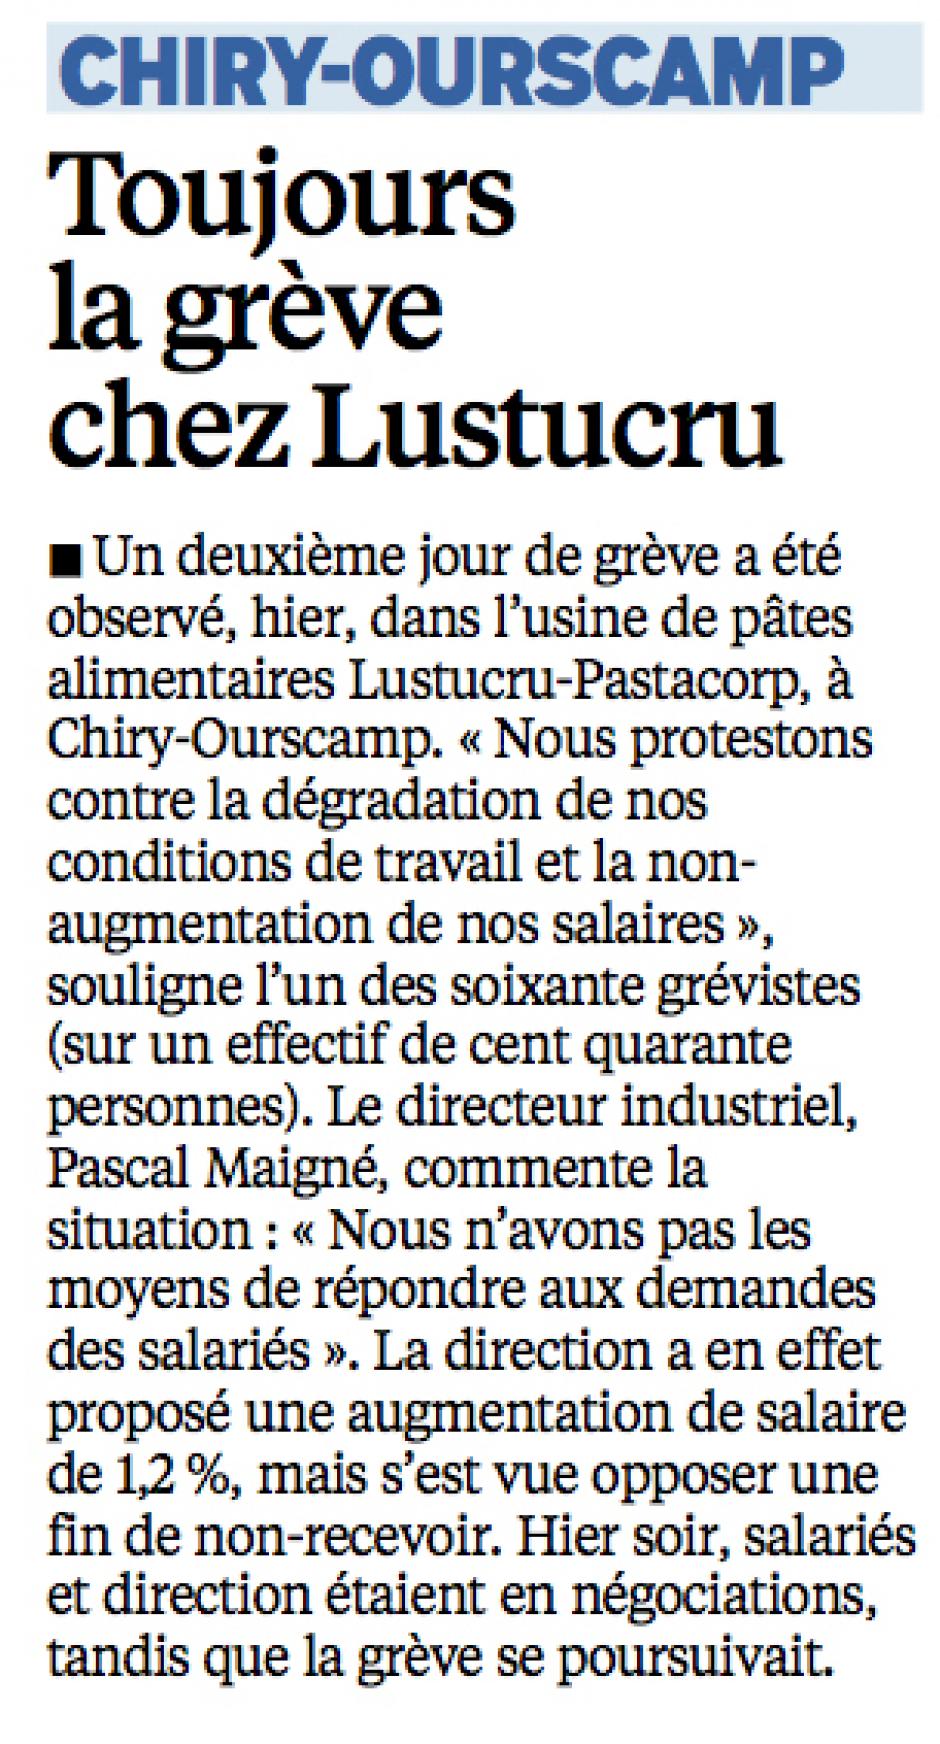 20140605-LeP-Chiry-Ourscamp-Toujours la grève chez Lustucru